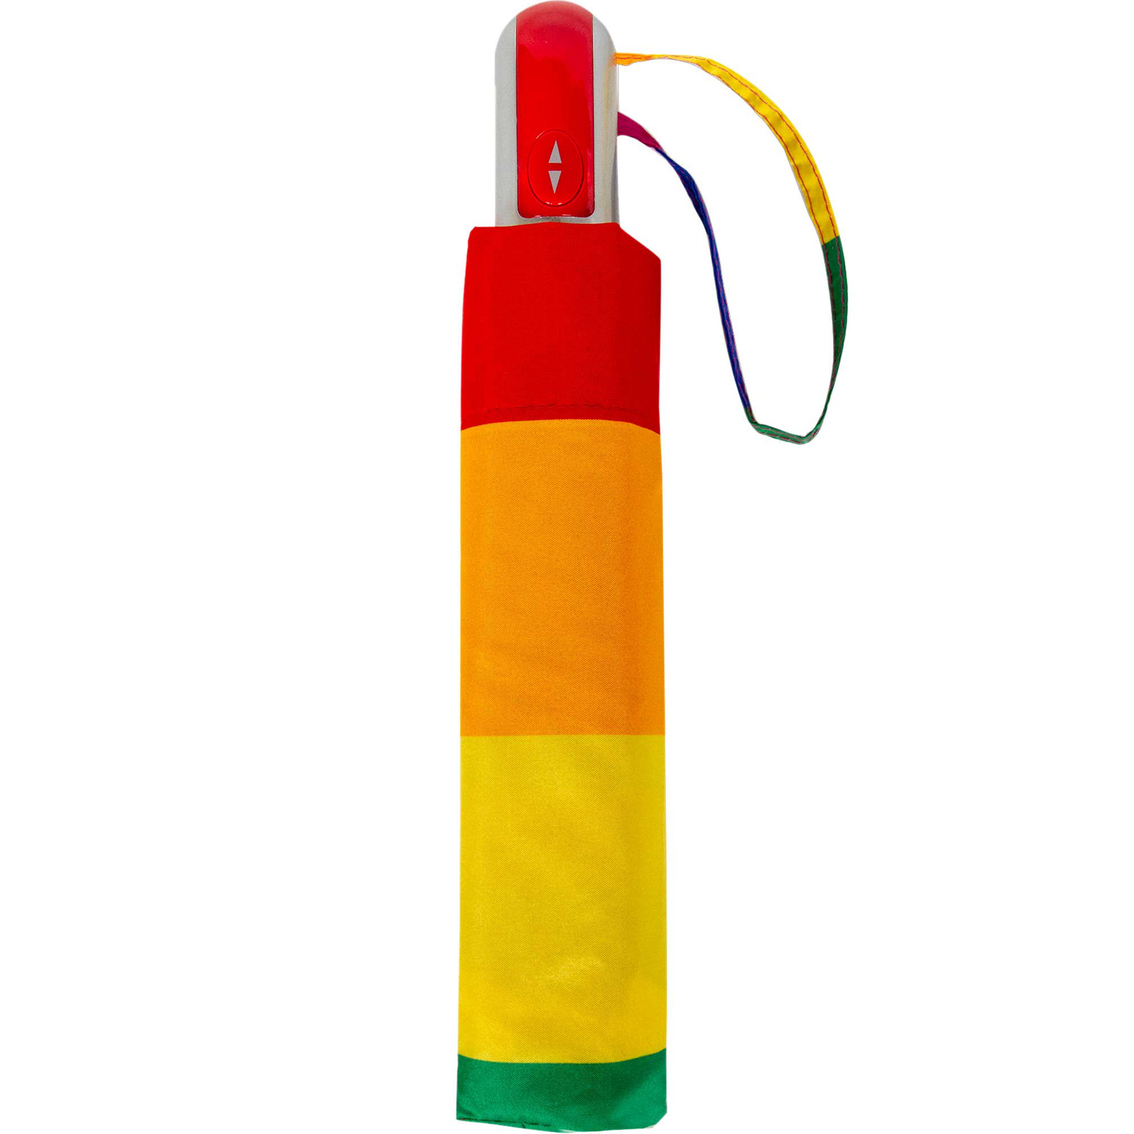 ShedRain Rainbow Compact Umbrella - Image 2 of 2